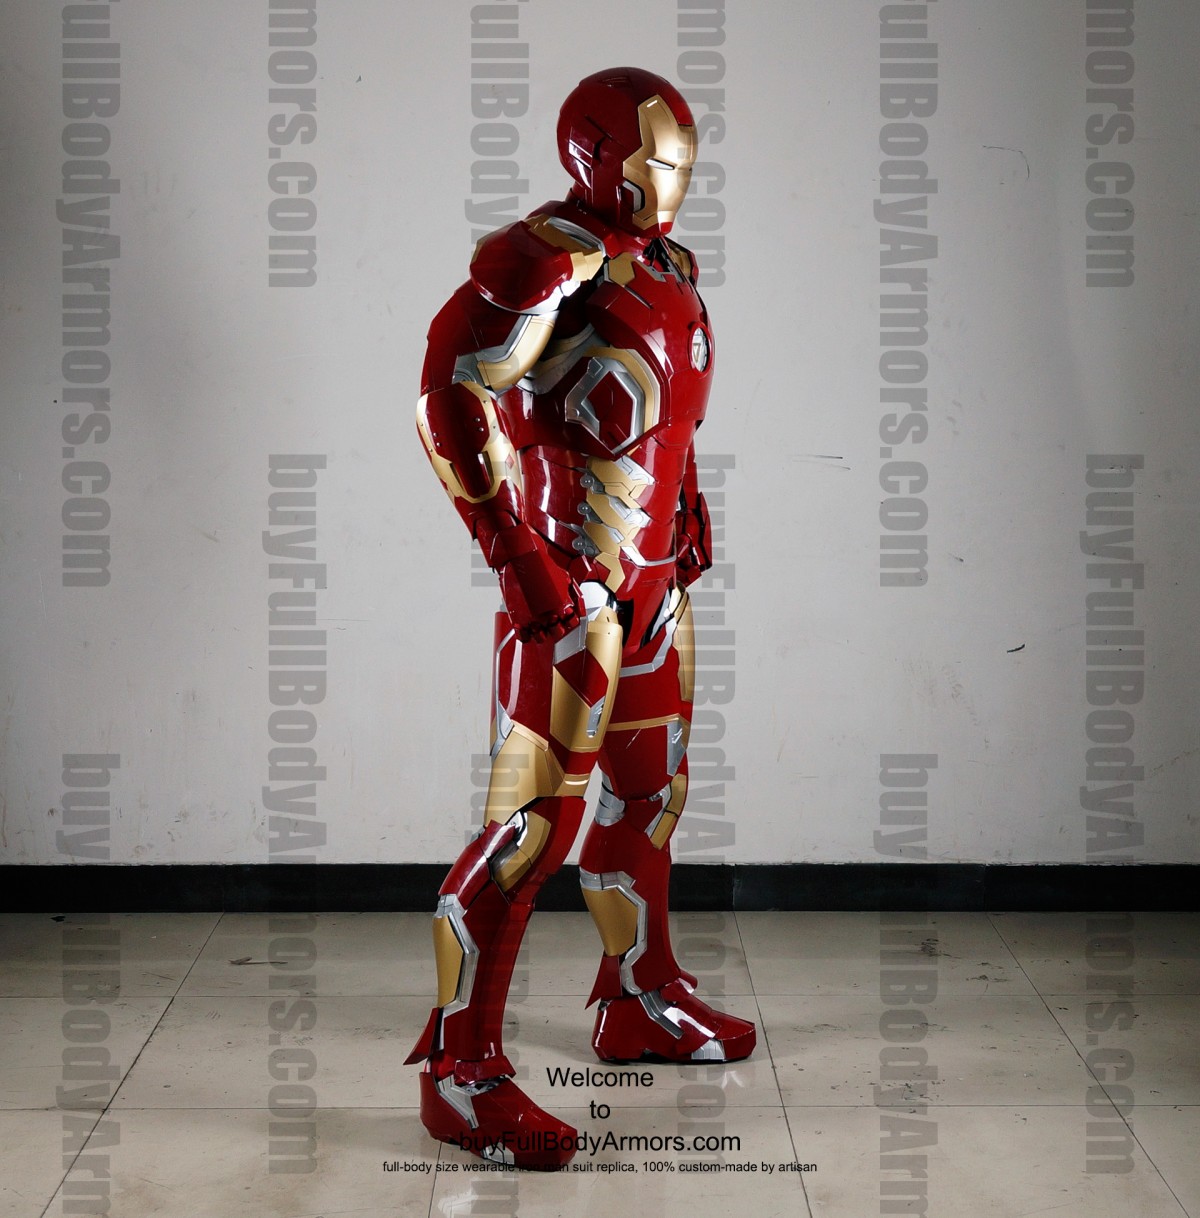 Buy Iron Man Suit Halo Master Chief Armor Batman Costume Star Wars Armor Buy The Wearable Iron Man Mark 43 Xliii Suit Costume Armor Buyfullbodyarmors Com